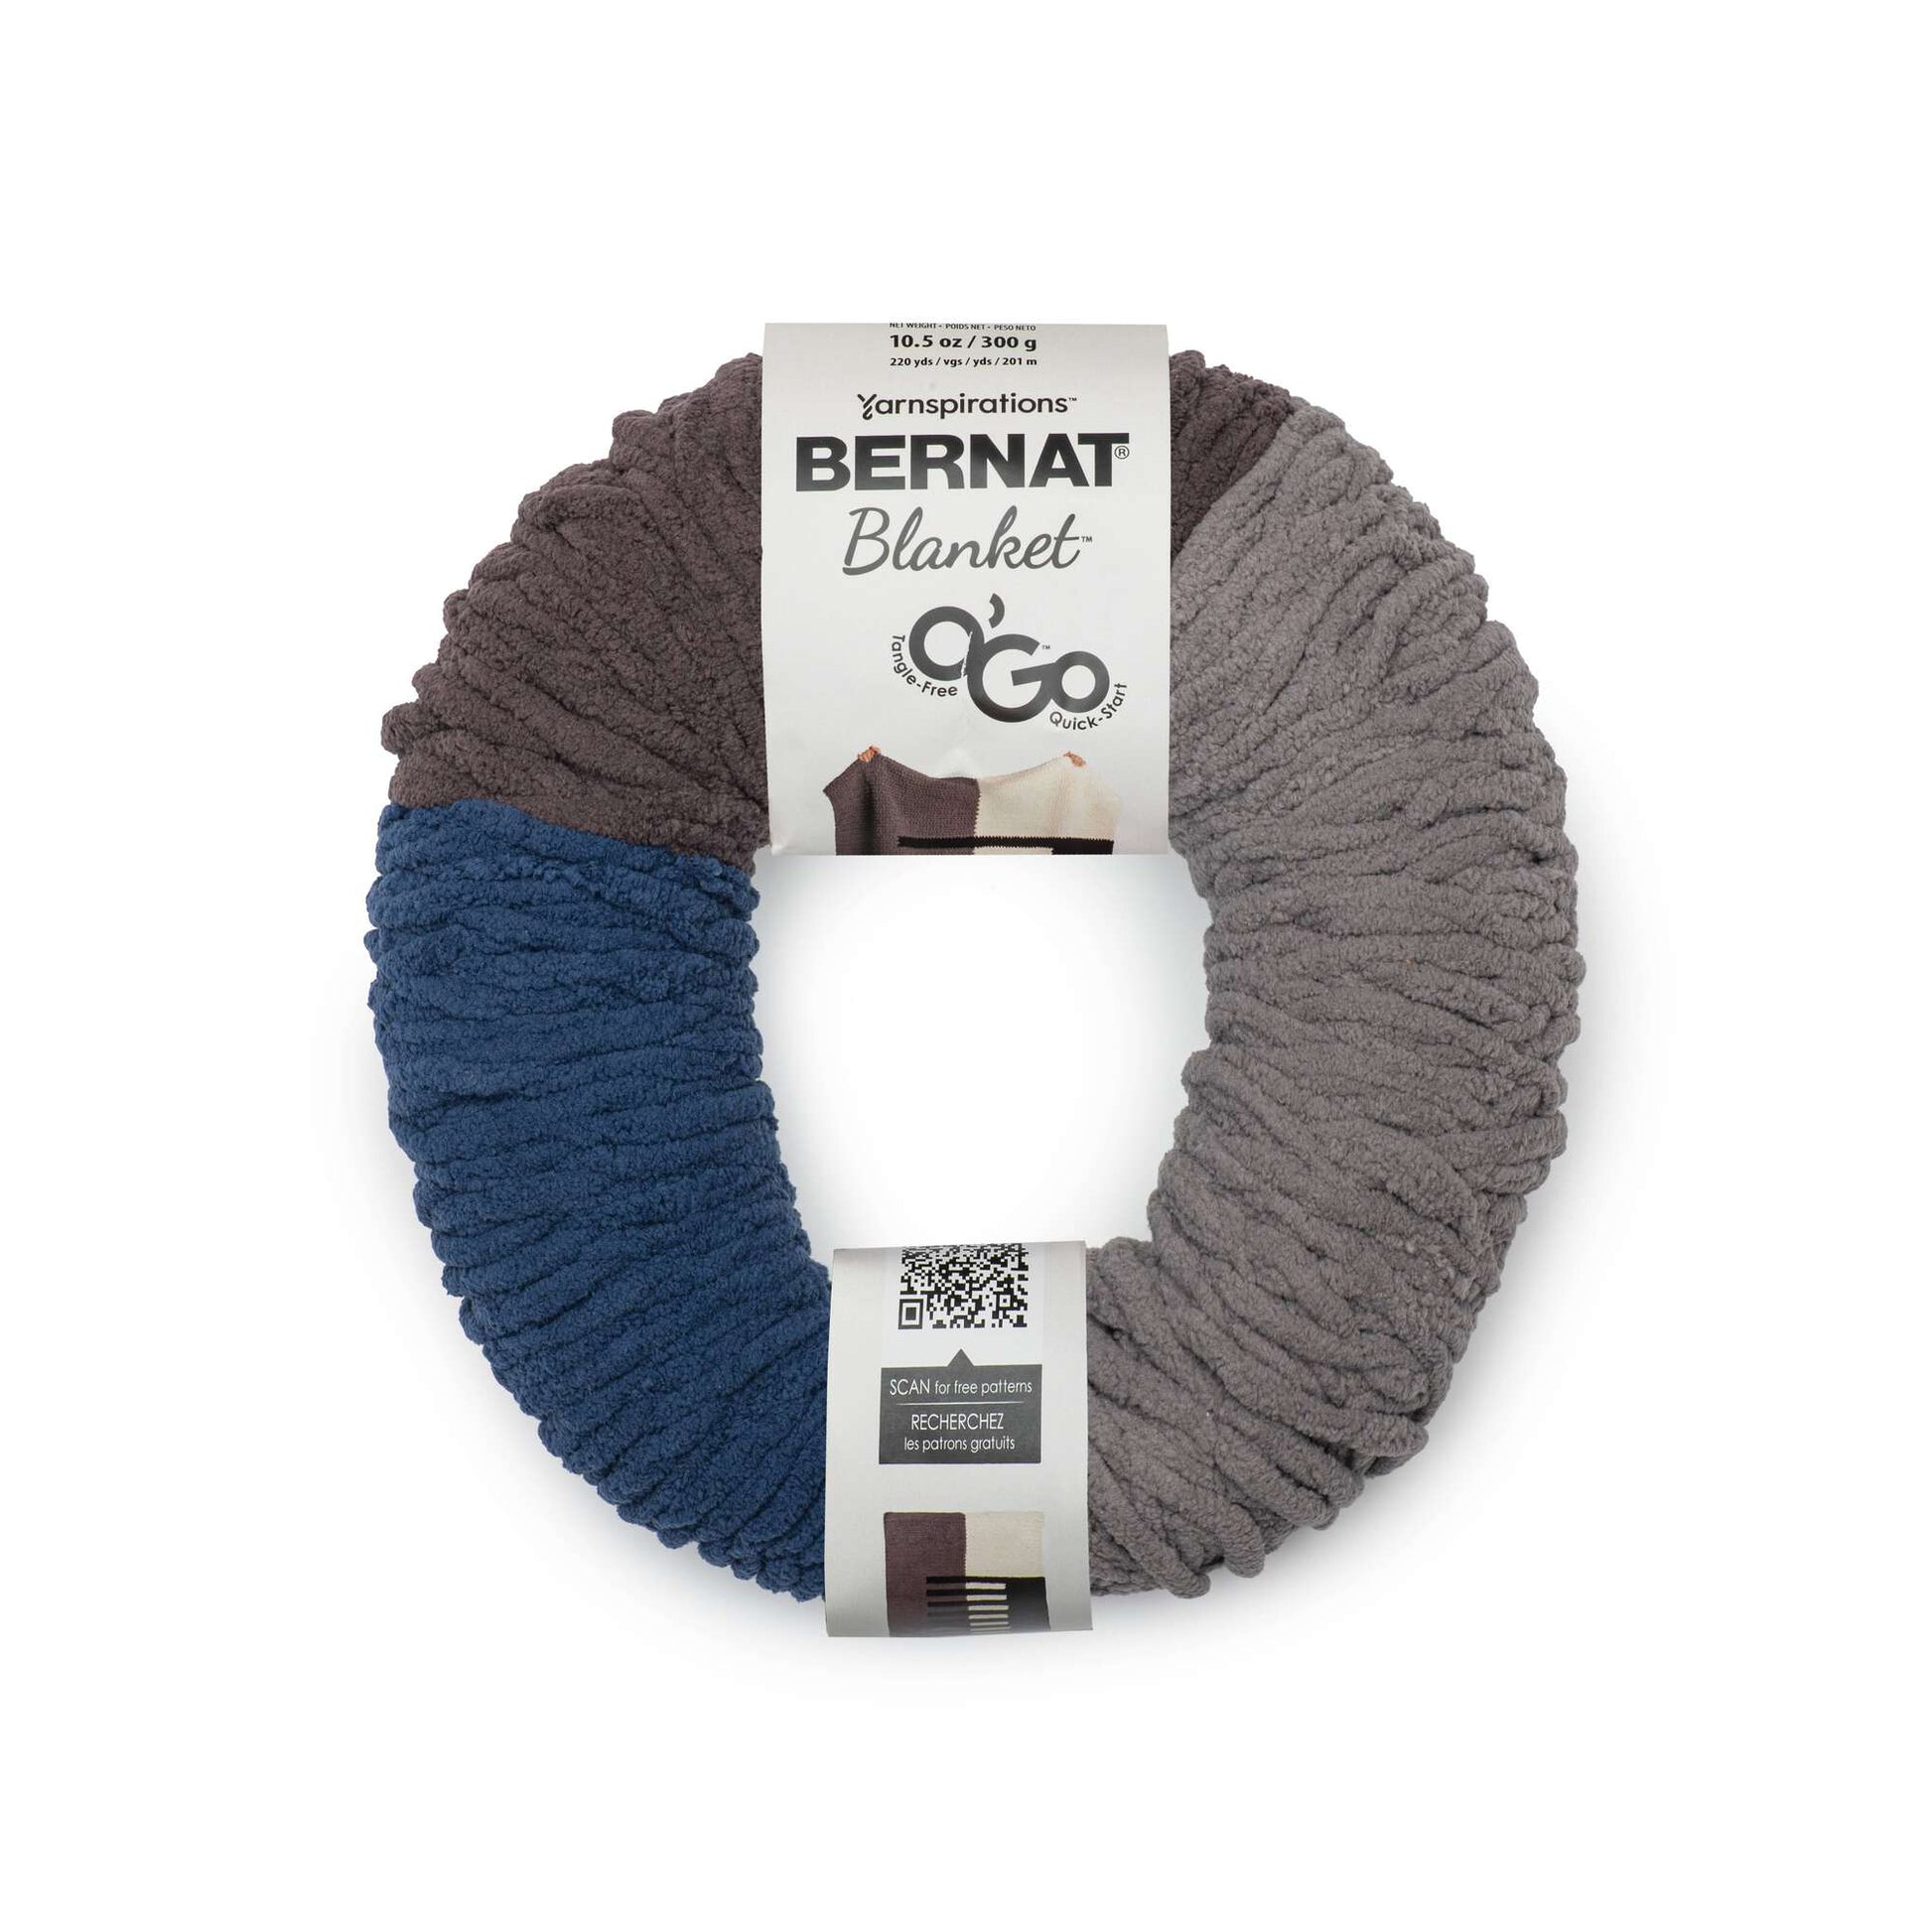 Bernat Blanket Super Bulky Acrylic Yarn - 2 Pack of 300g/10.5oz #6 Chunky Chenille Heavy Weight Yarn for Knitting and Crocheting, Amigurumi, Thick